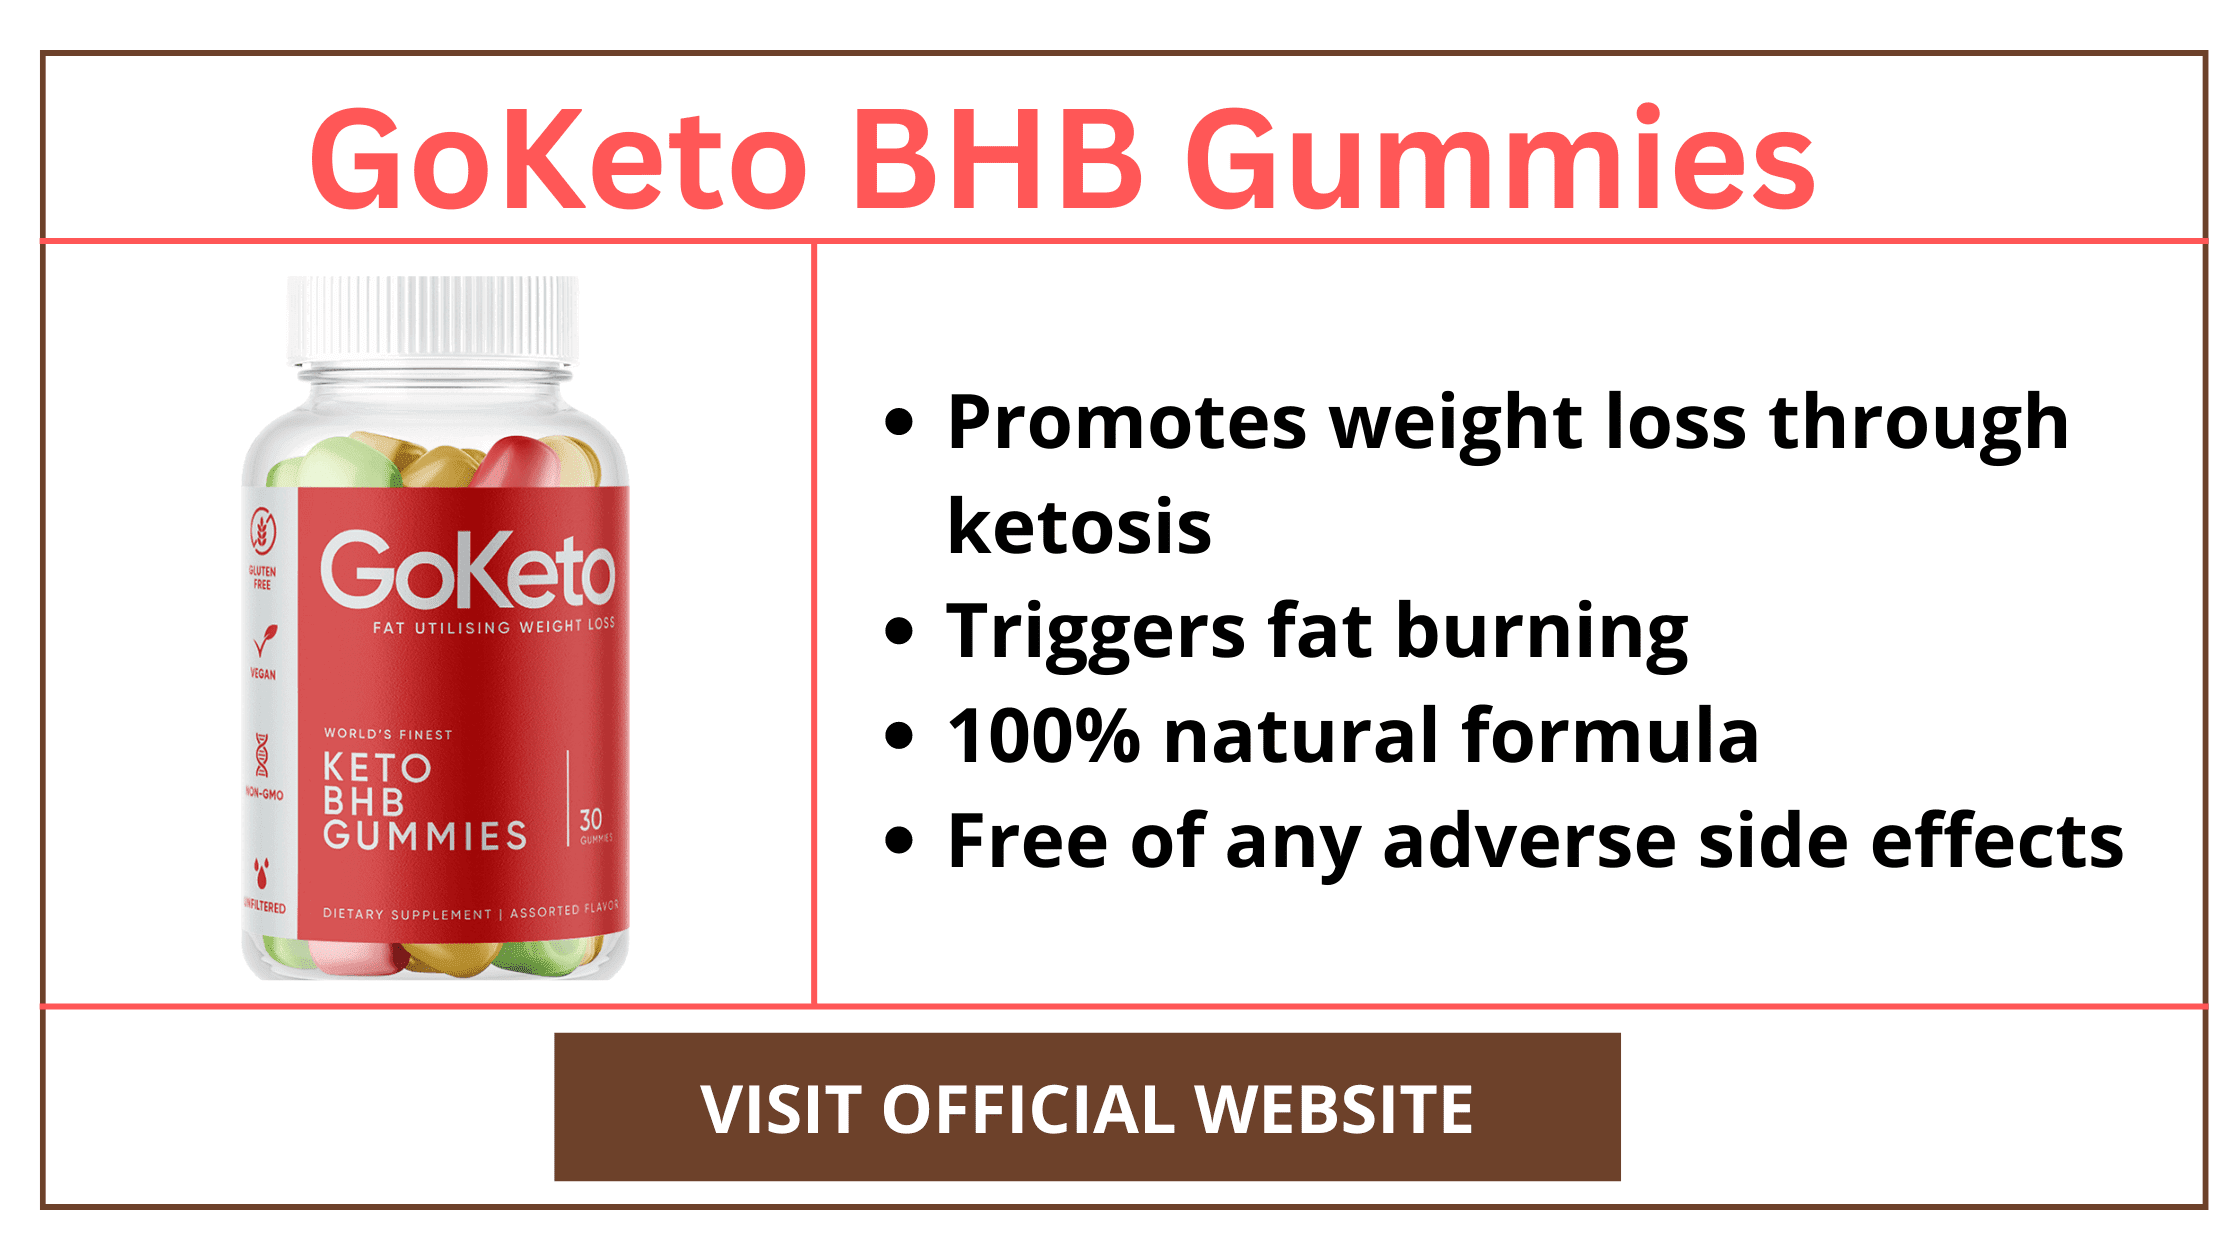 GoKeto BHB Gummies Benefits